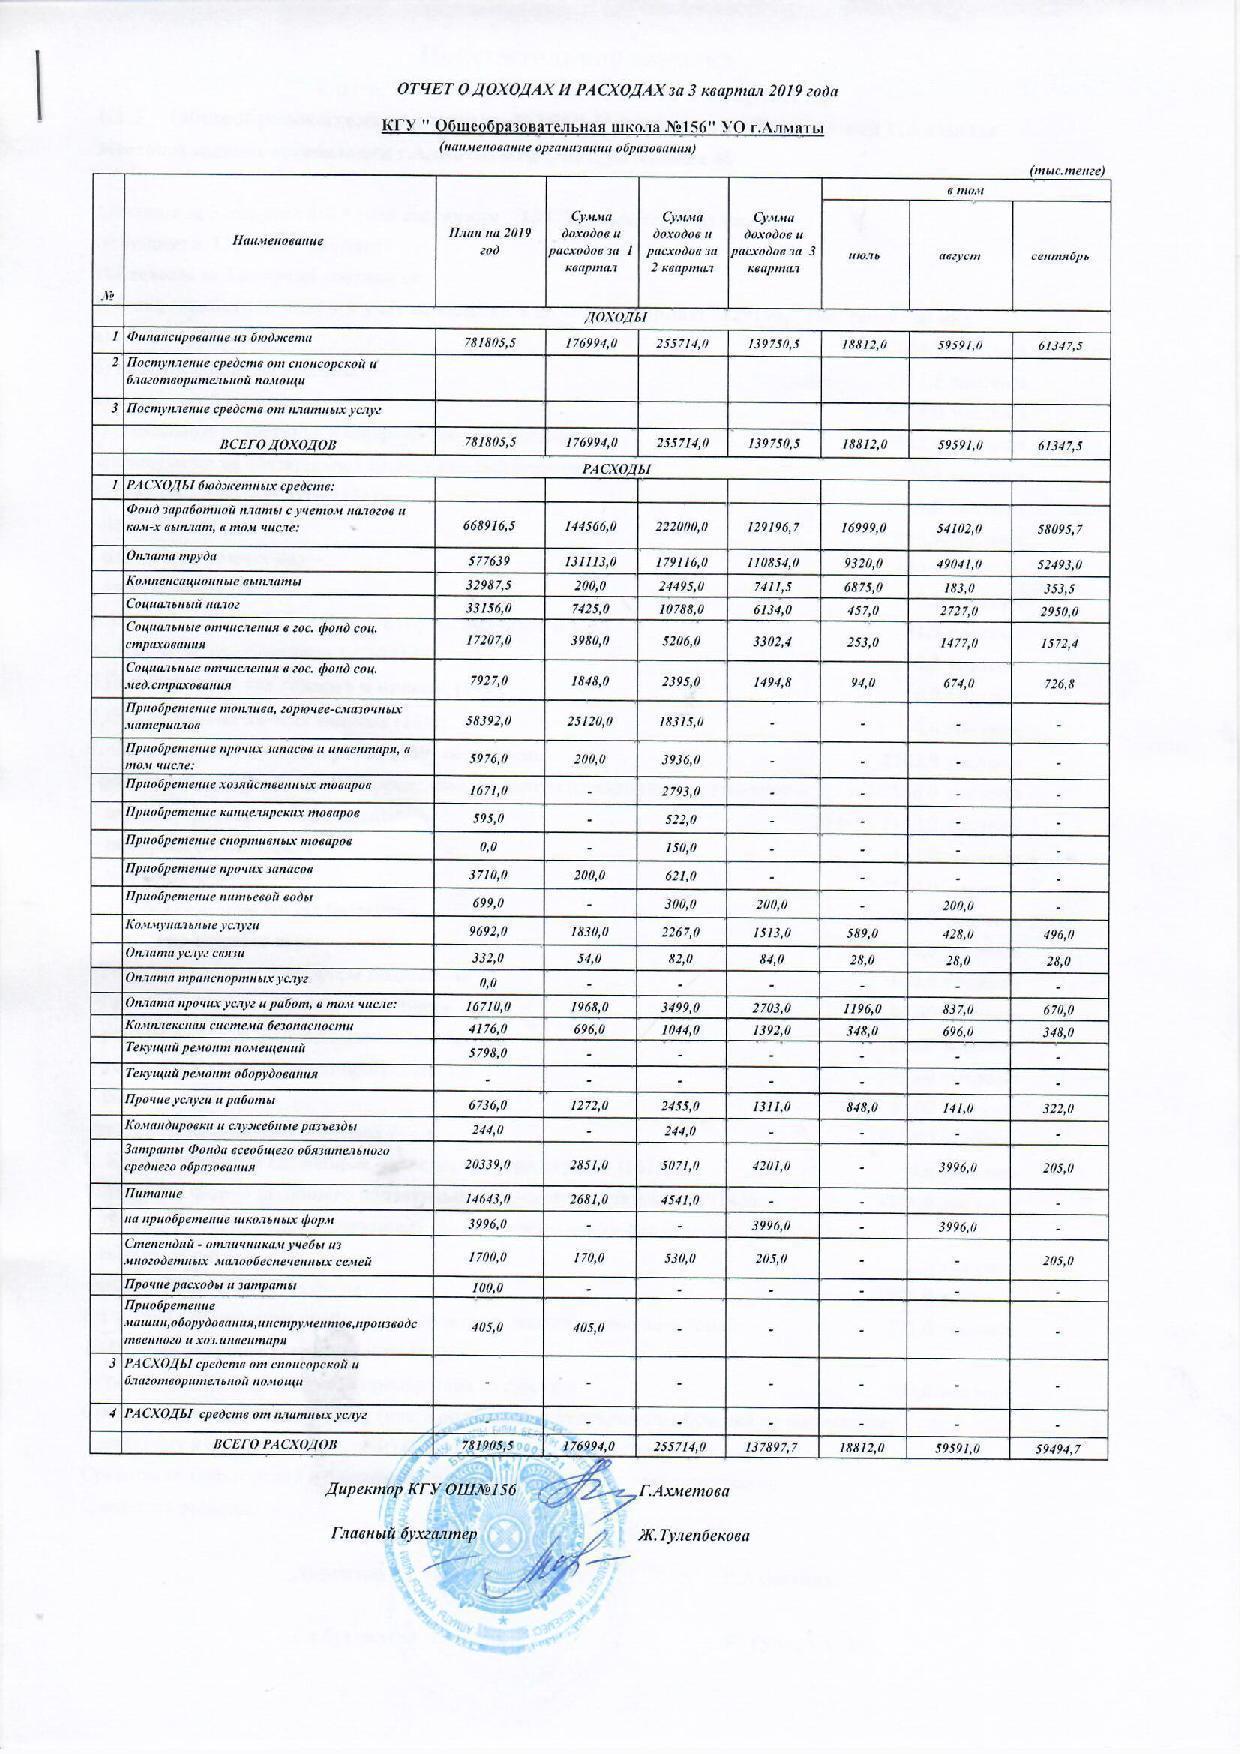 Отчет о доходах и расходах за 3 кв 2019